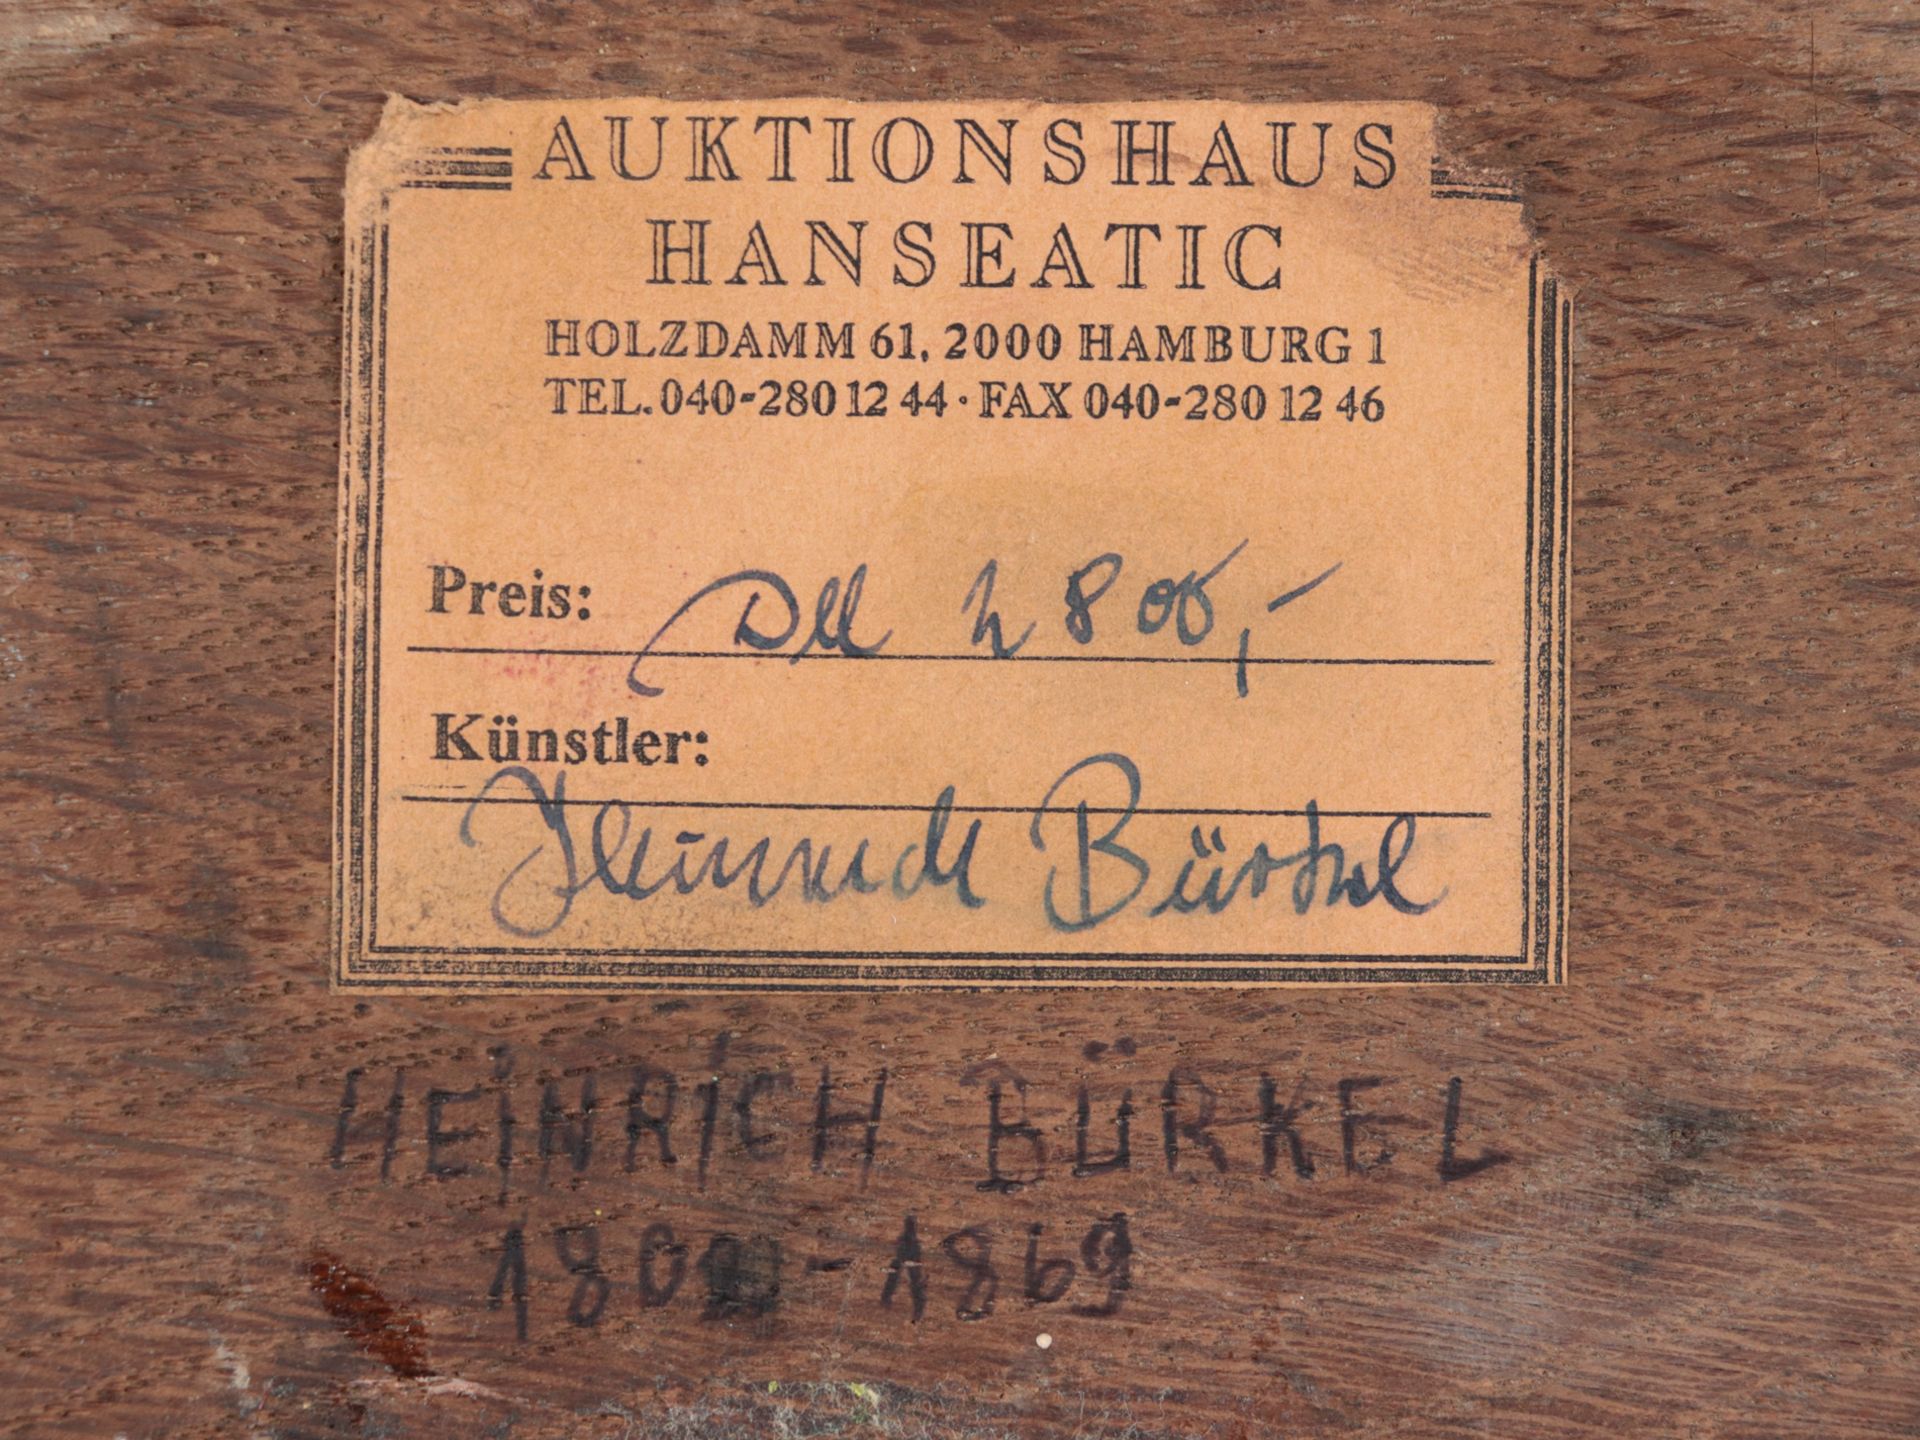 Bürkel, Heinrich attrib., - Image 10 of 10